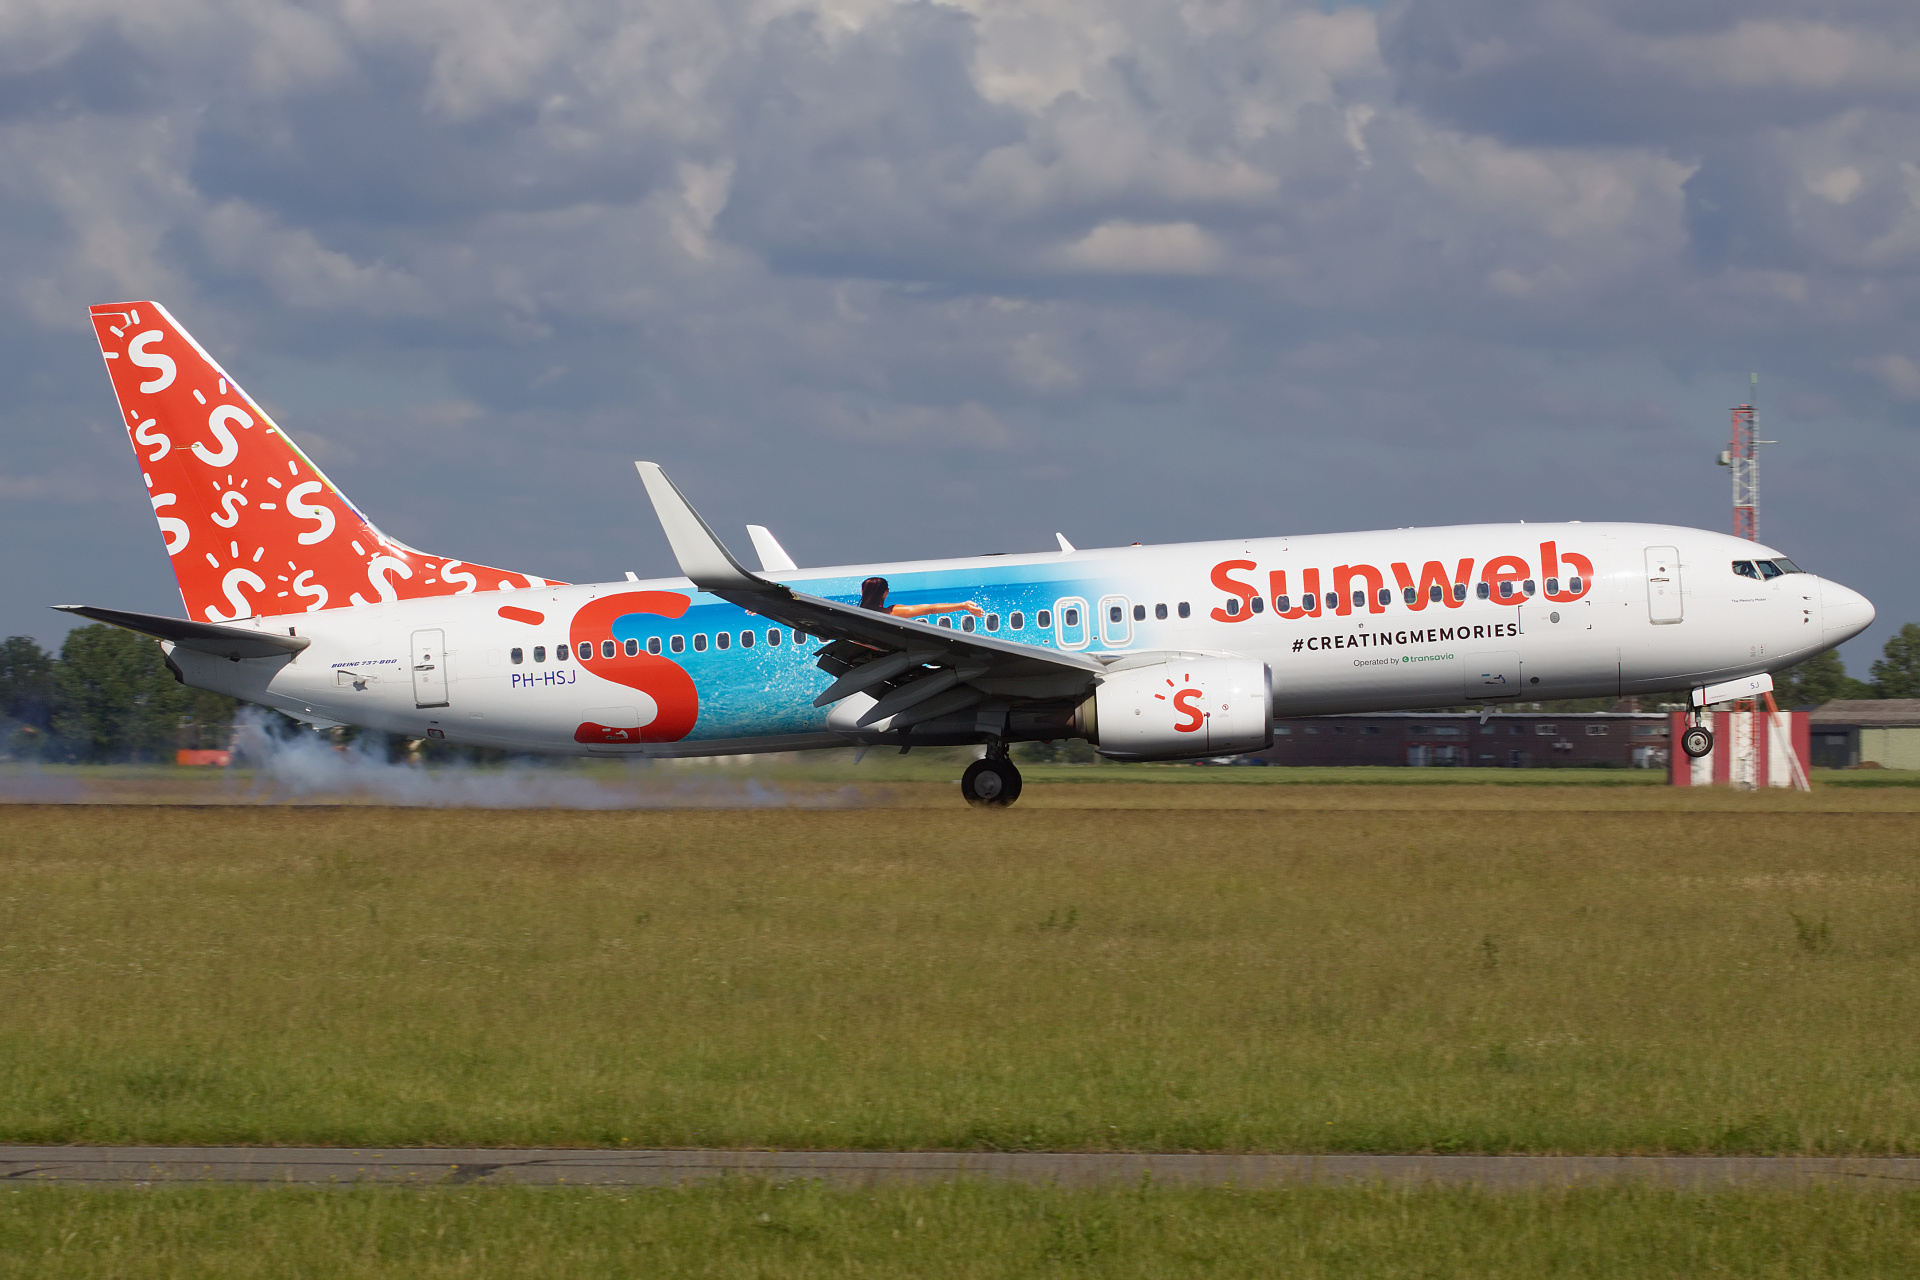 PH-HSJ, Sunweb (#CreatingMemories livery) (Aircraft » Schiphol Spotting » Boeing 737-800)